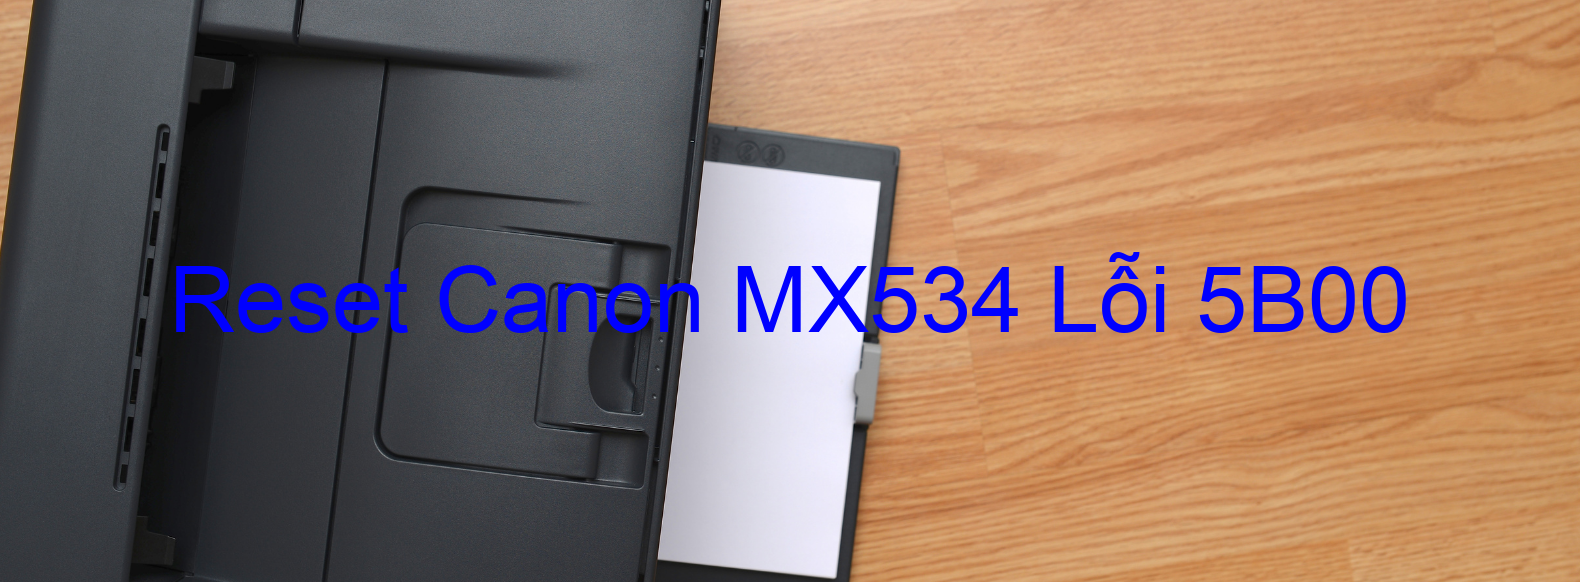 Reset Canon MX534 Lỗi 5B00